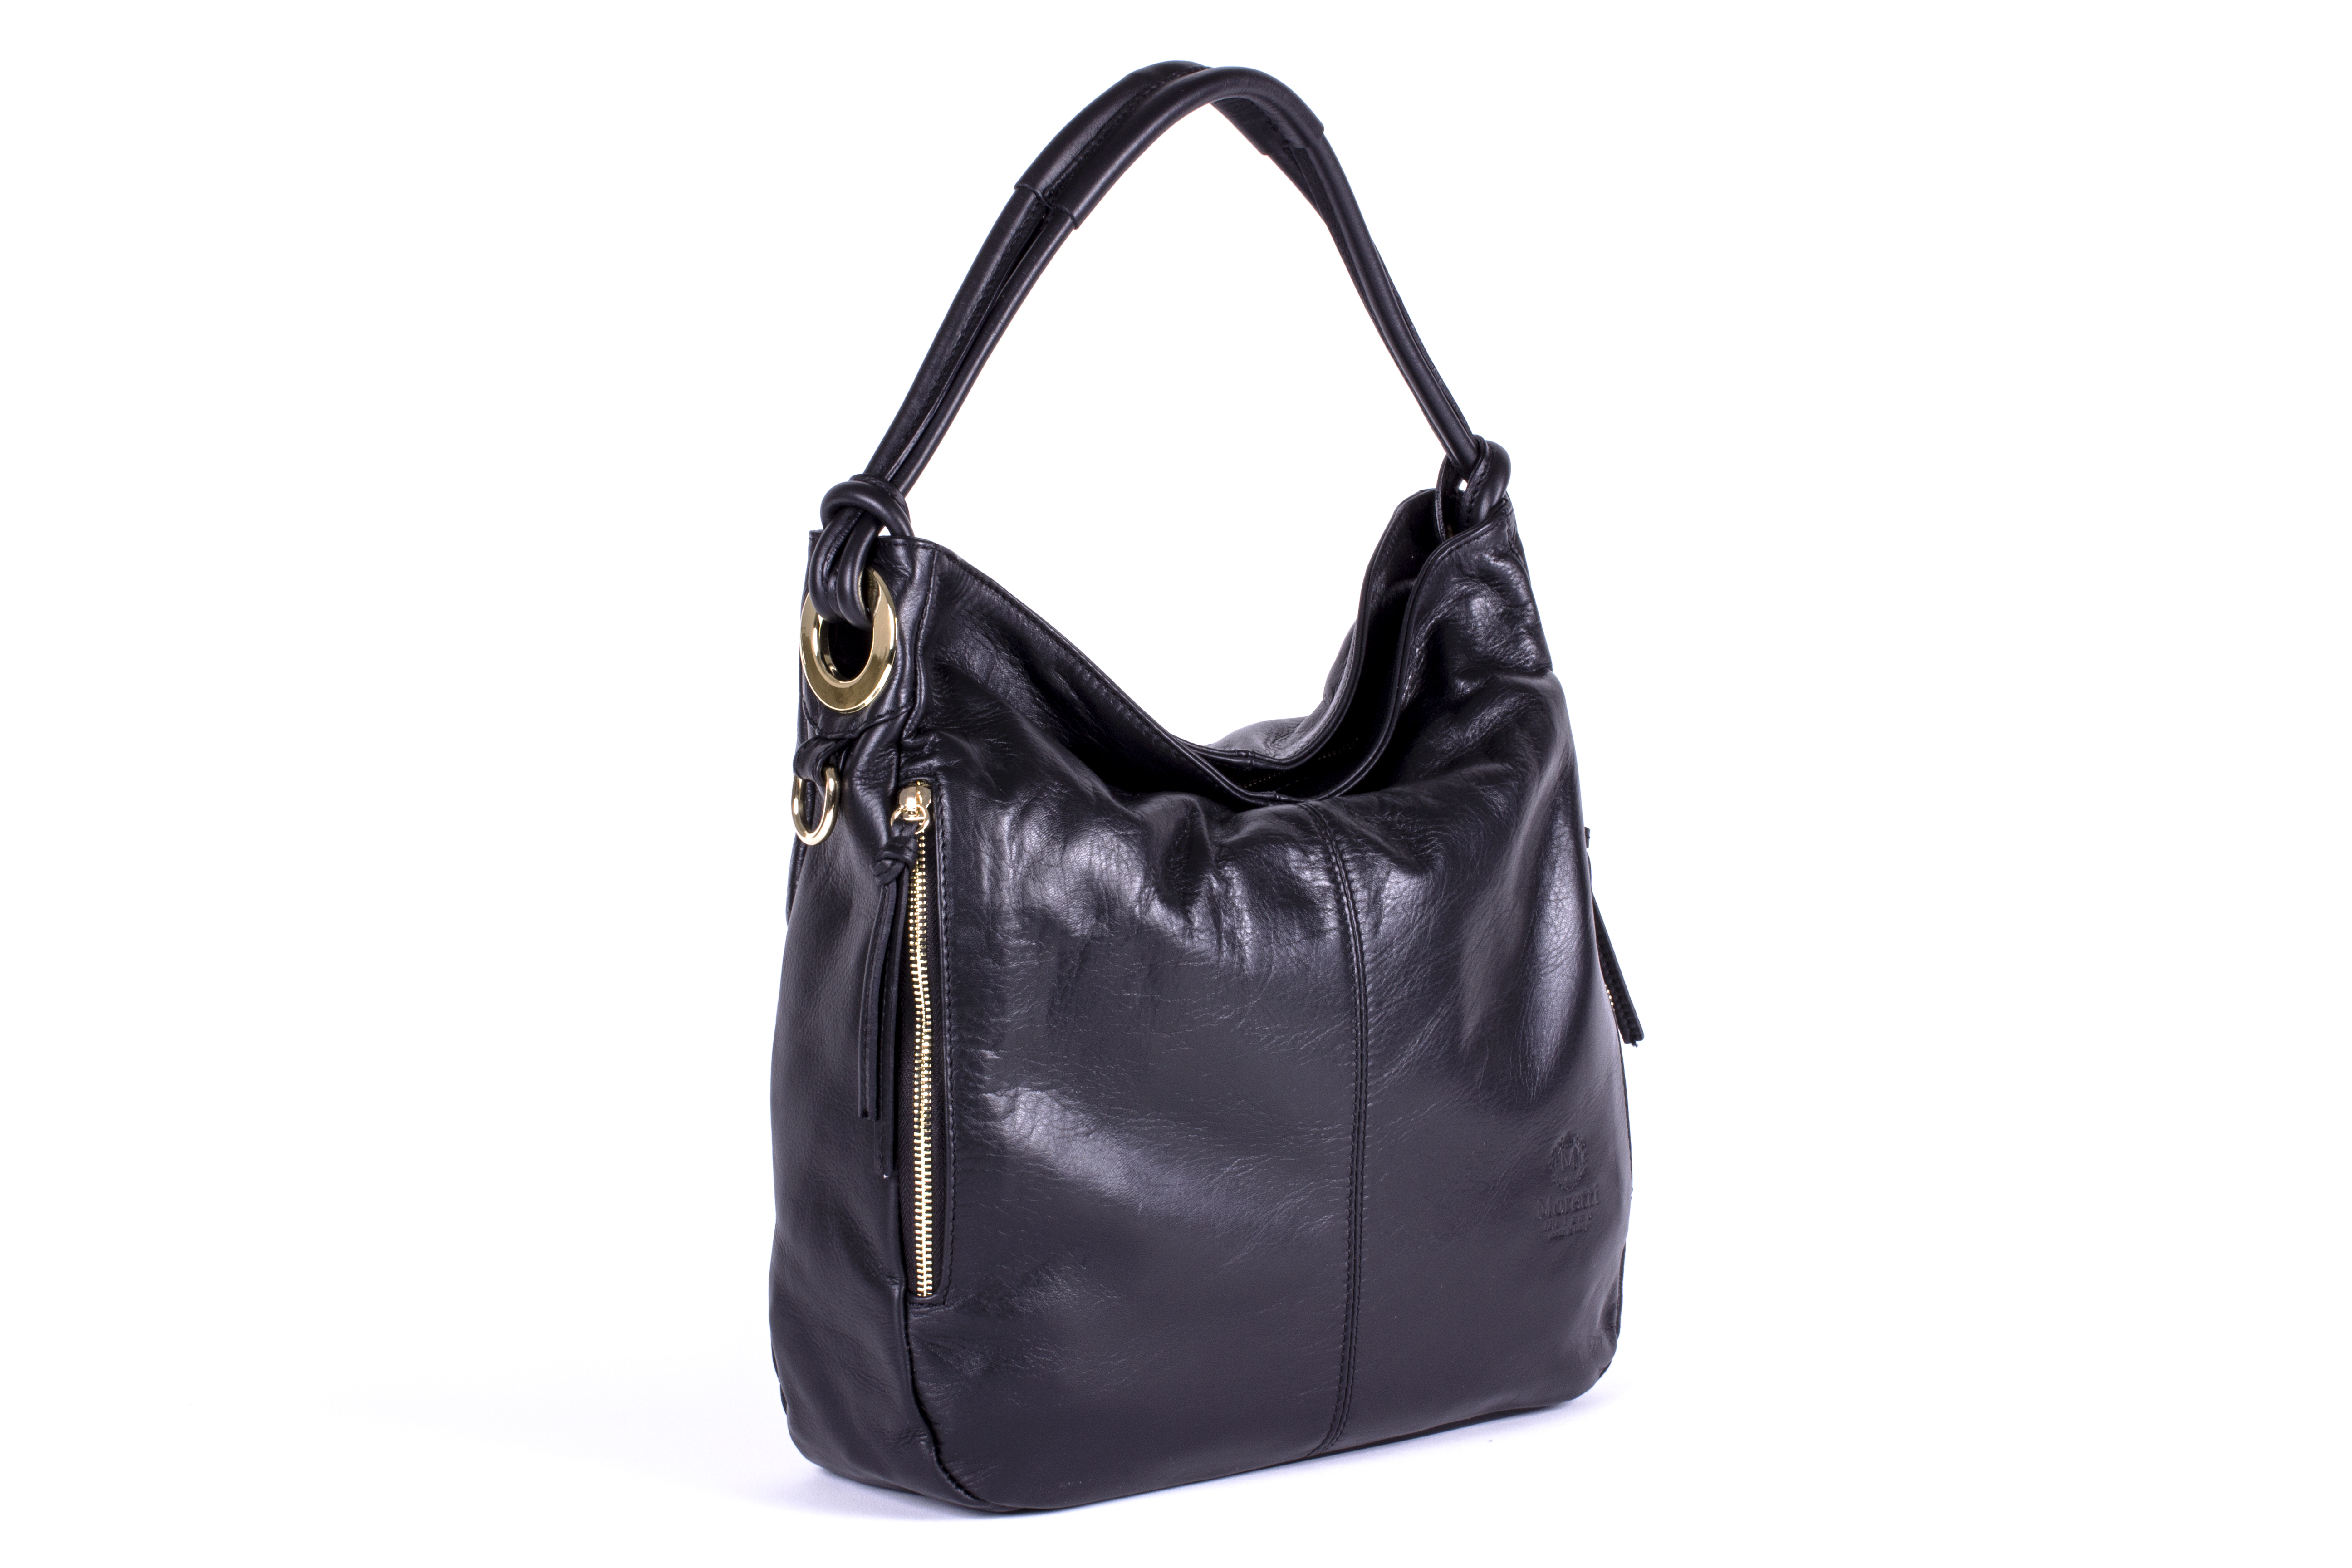 The Latest in Powerful 100% Italian Leather Handbags |Moretti Milano